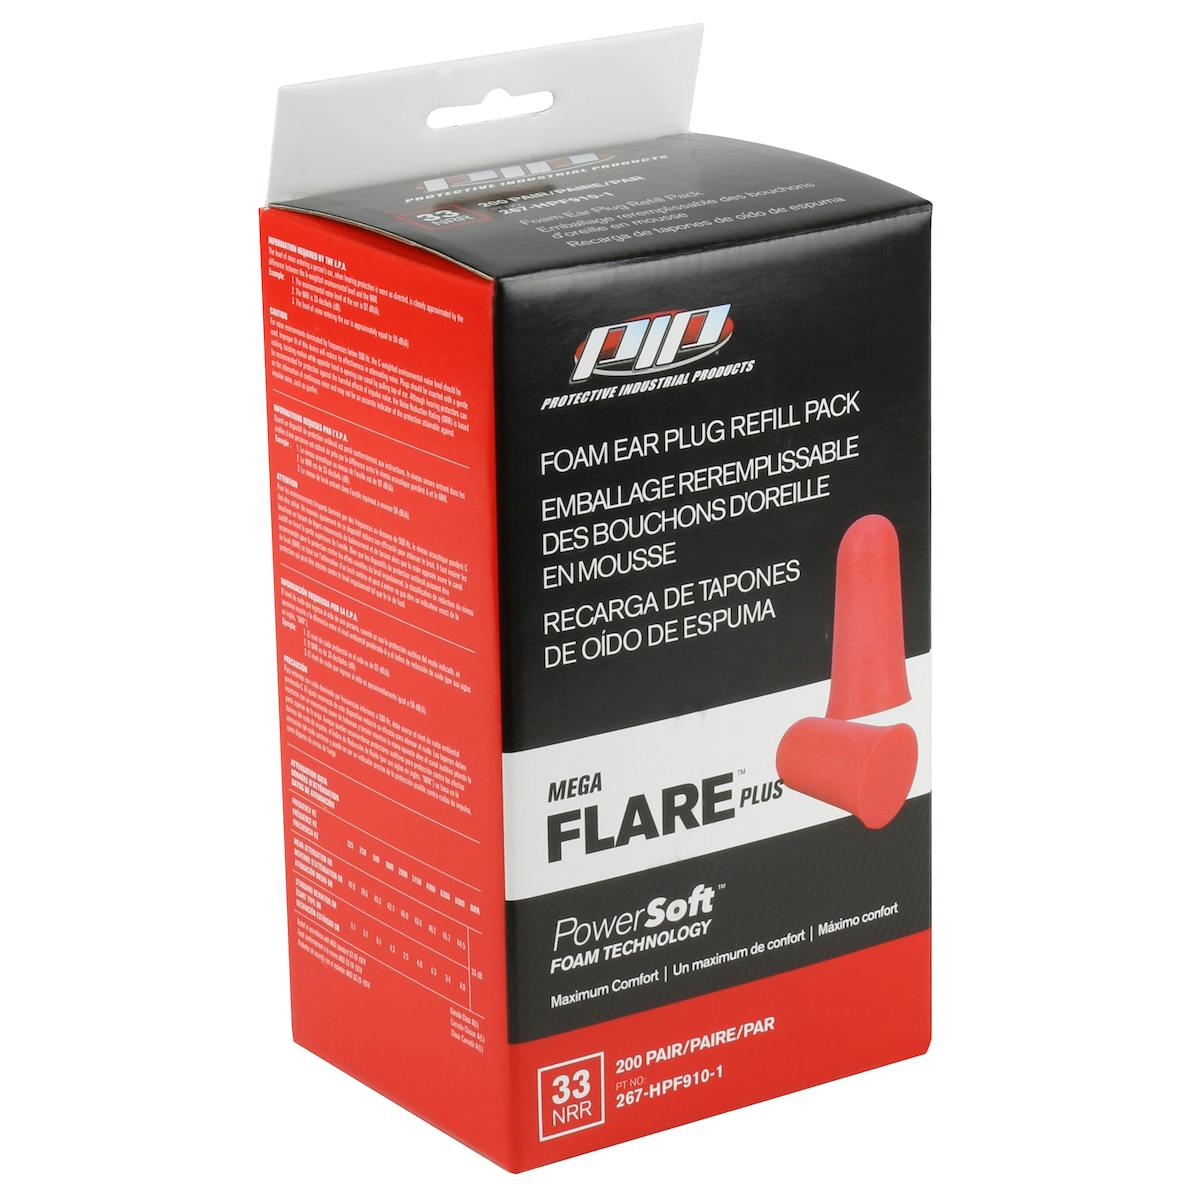 Disposable Soft Polyurethane Foam Ear Plugs - Dispenser Refill Pack, Red (267-HPF910-1) - OS